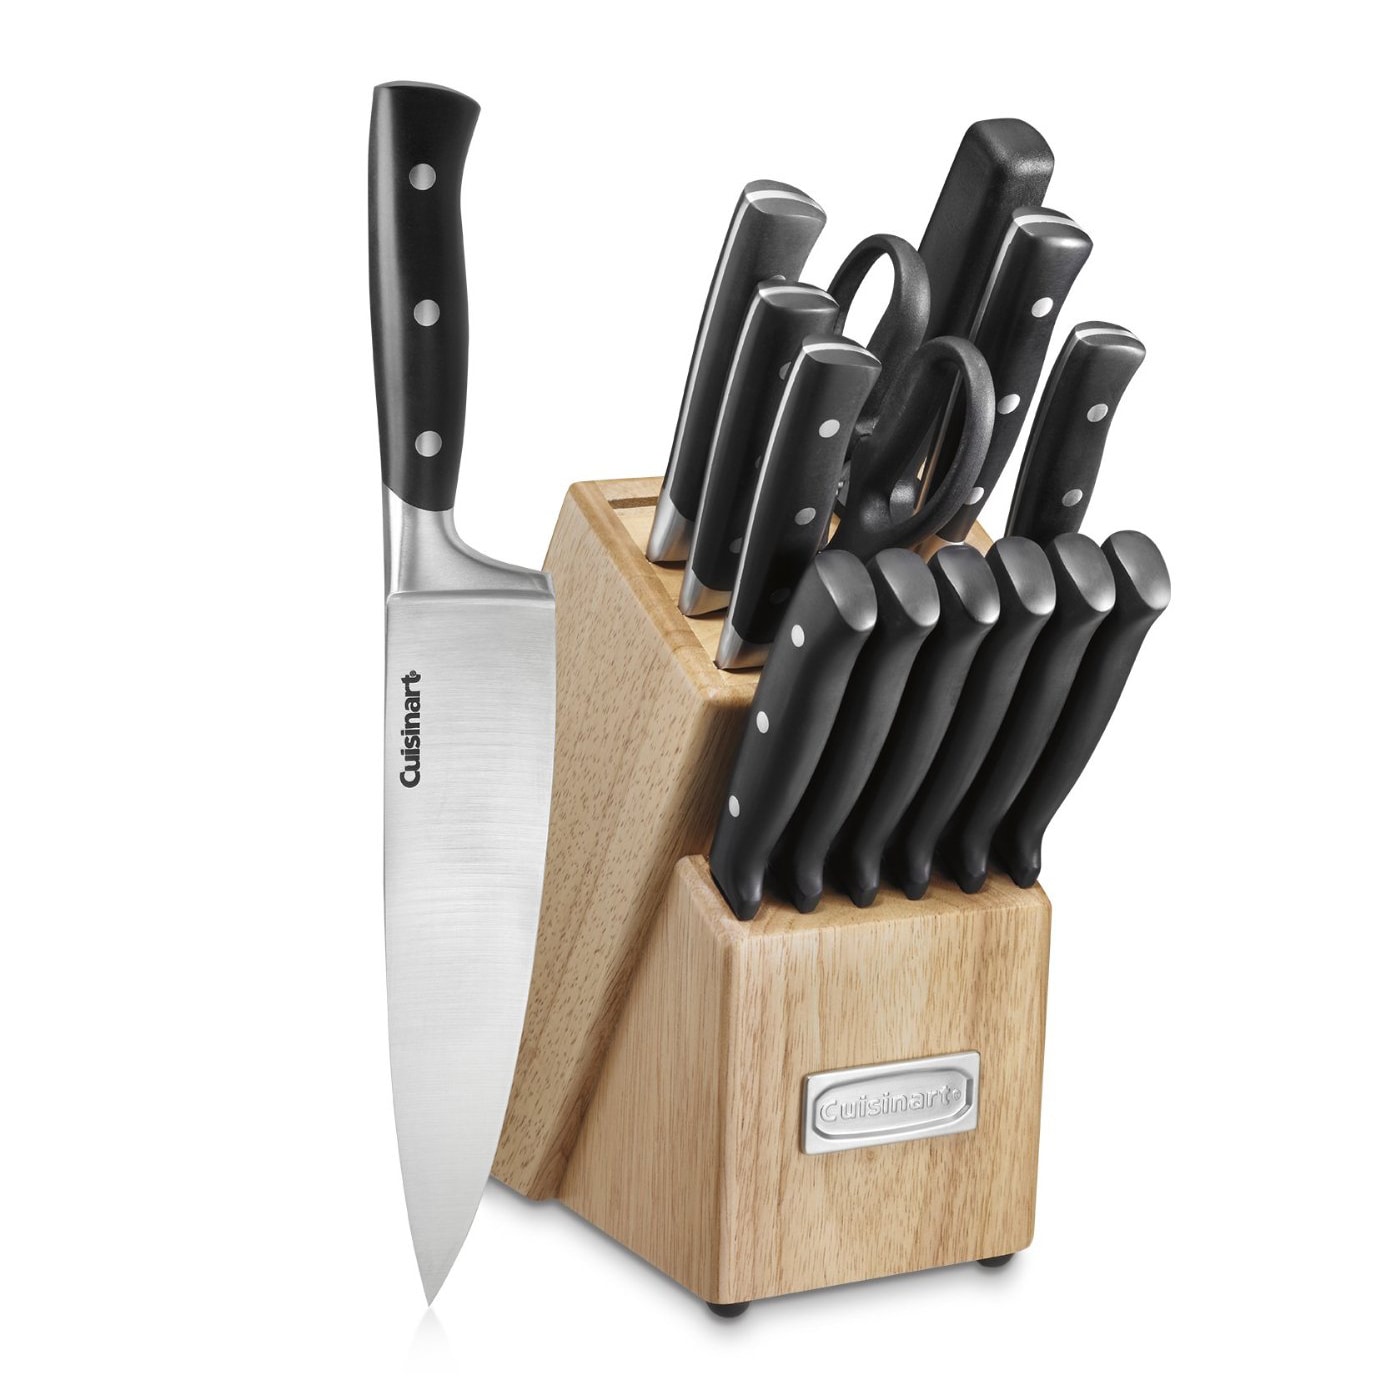 Cuisinart German Stainless Steel Hollow Handle Cutlery Block 15 Pc. Set, Cutlery, Household